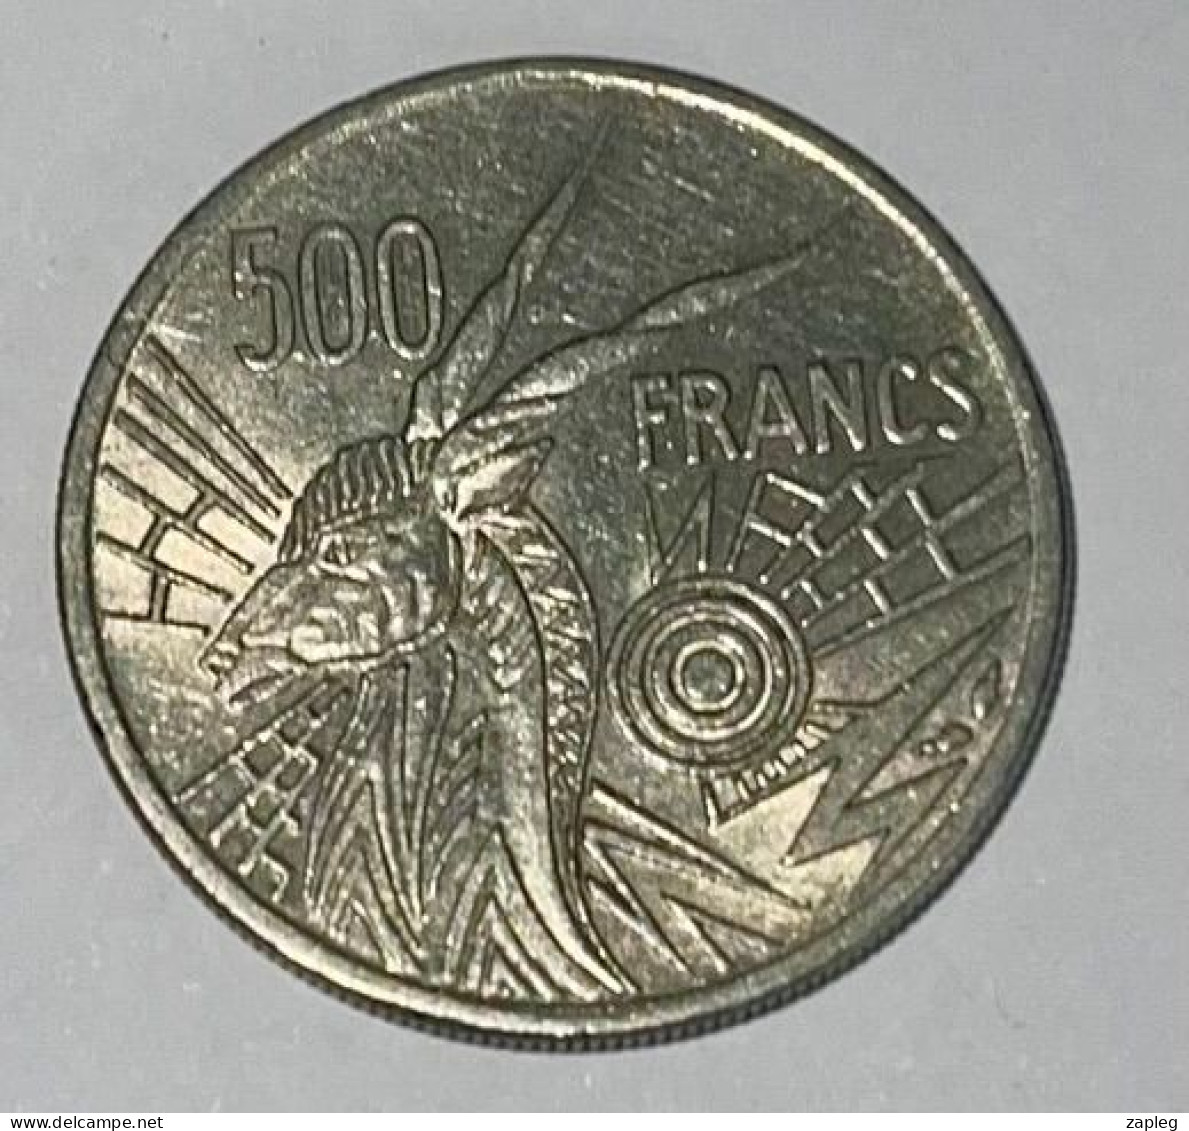 Afrique Centrale (BEAC) 500 Francs, 1976 - Cameroun - Kameroen